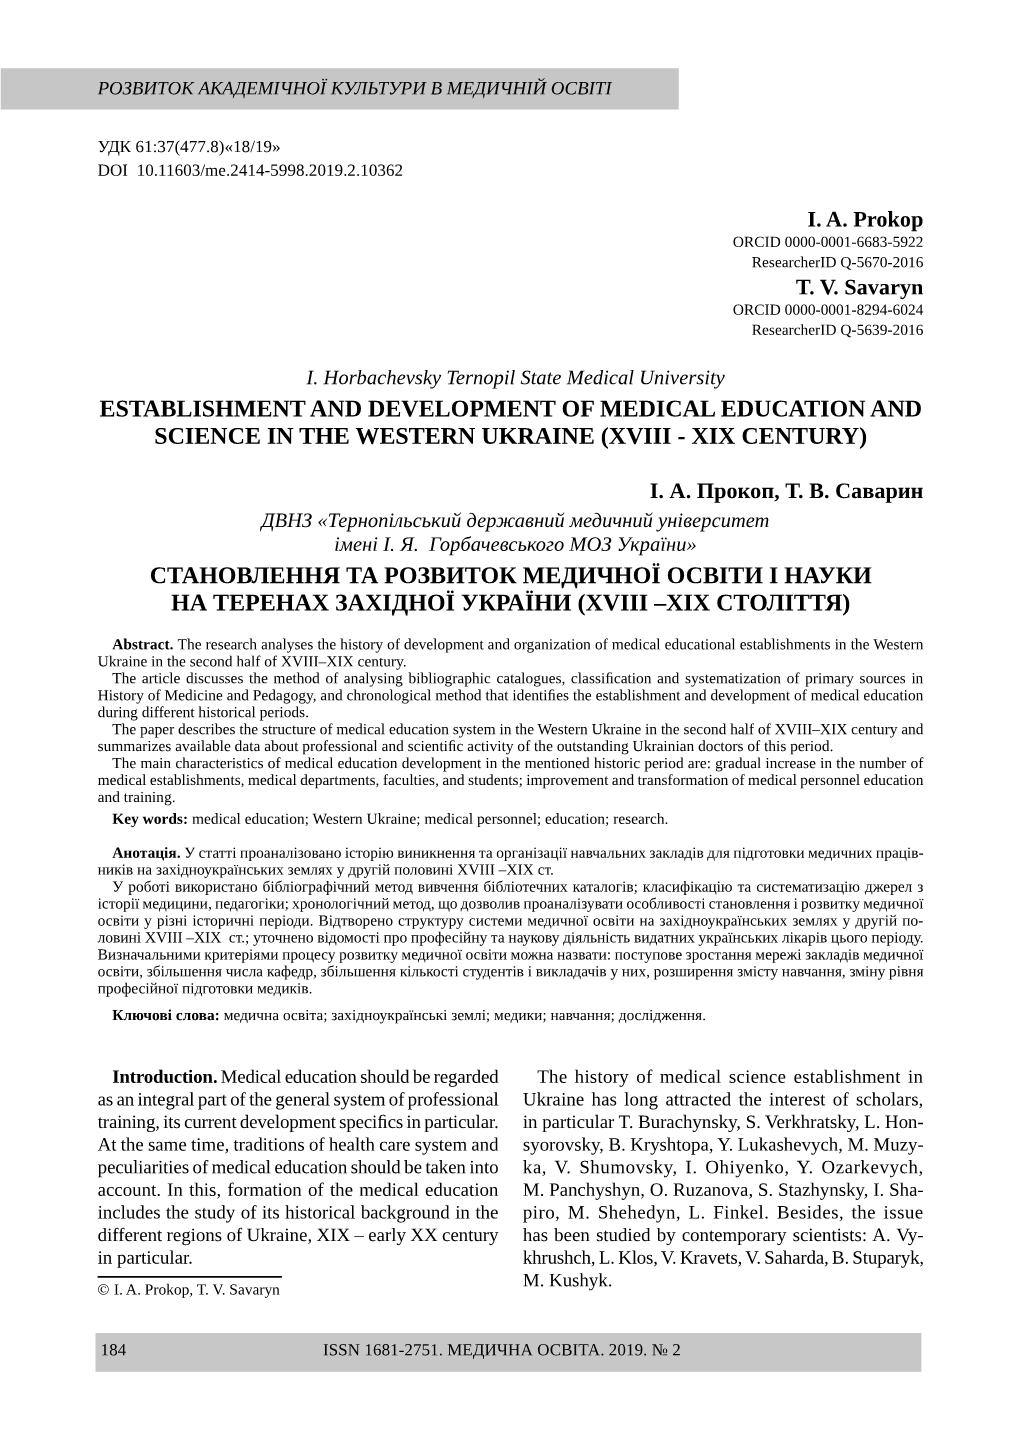 Establishment and Development of Medical Education and Science in the Western Ukraine (Xviii - Xix Century)